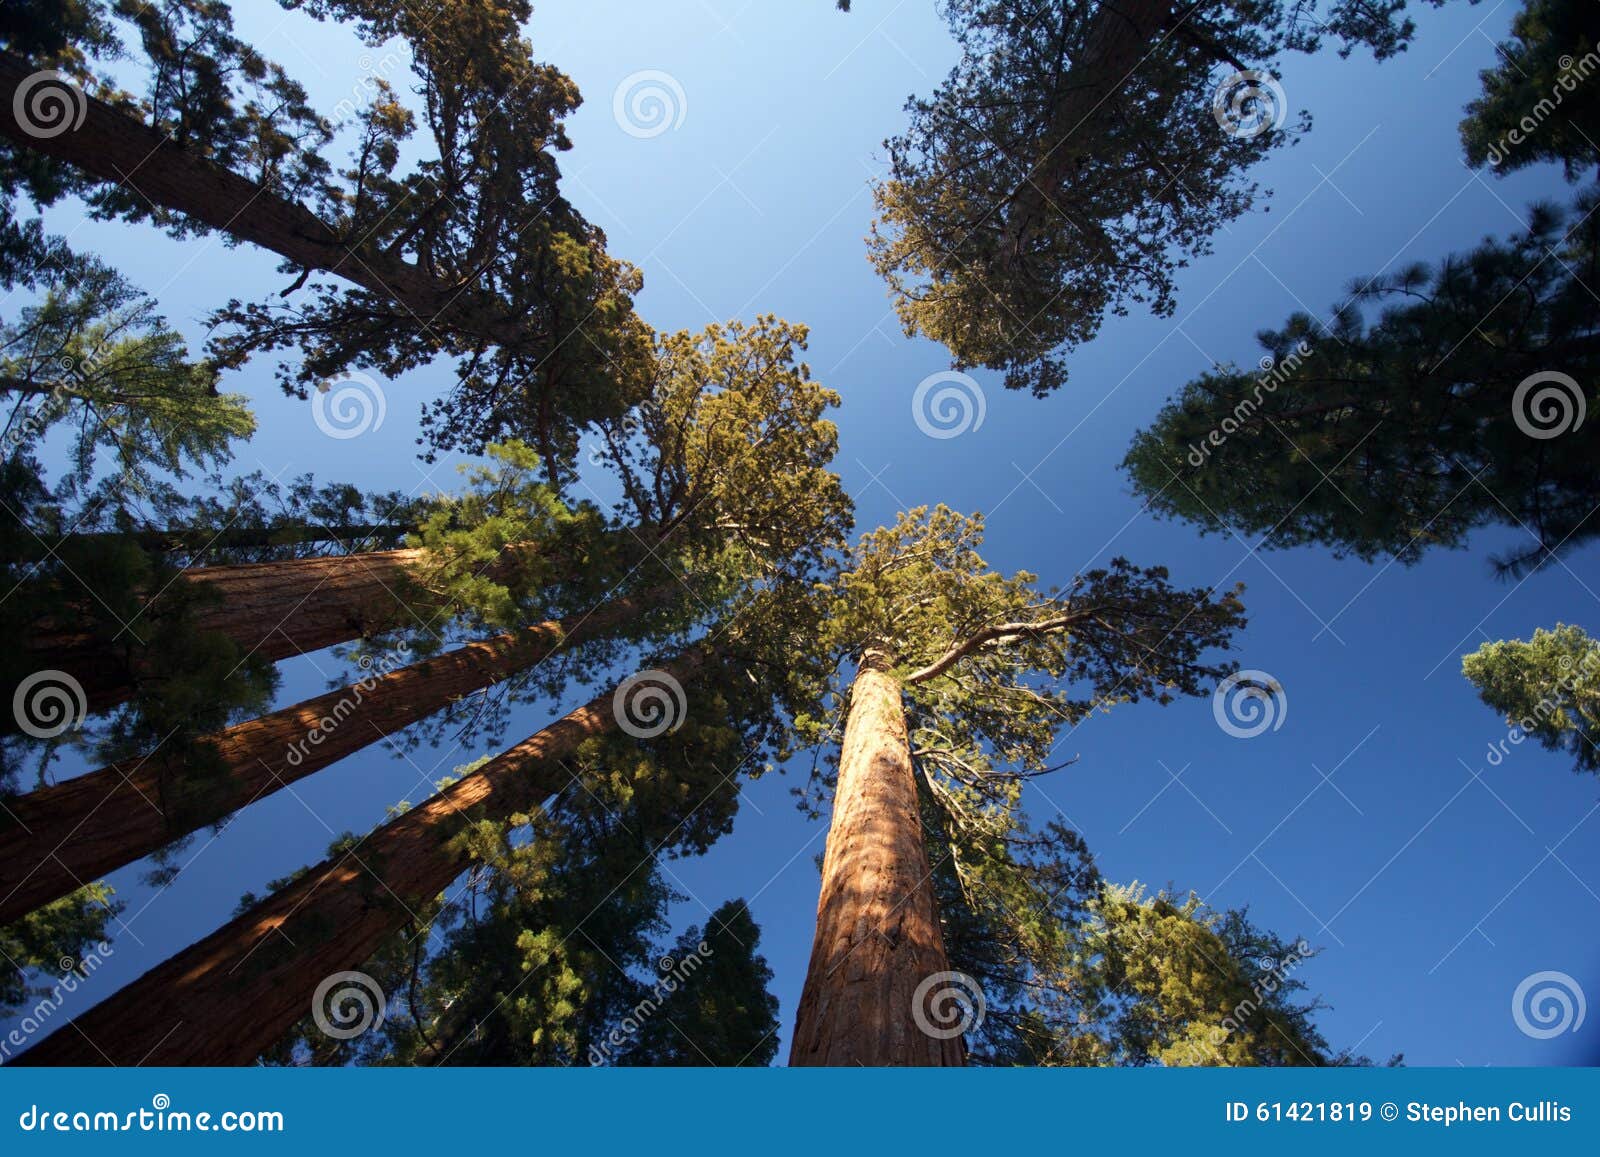 giant sequoias, mariposa grove, yosemite